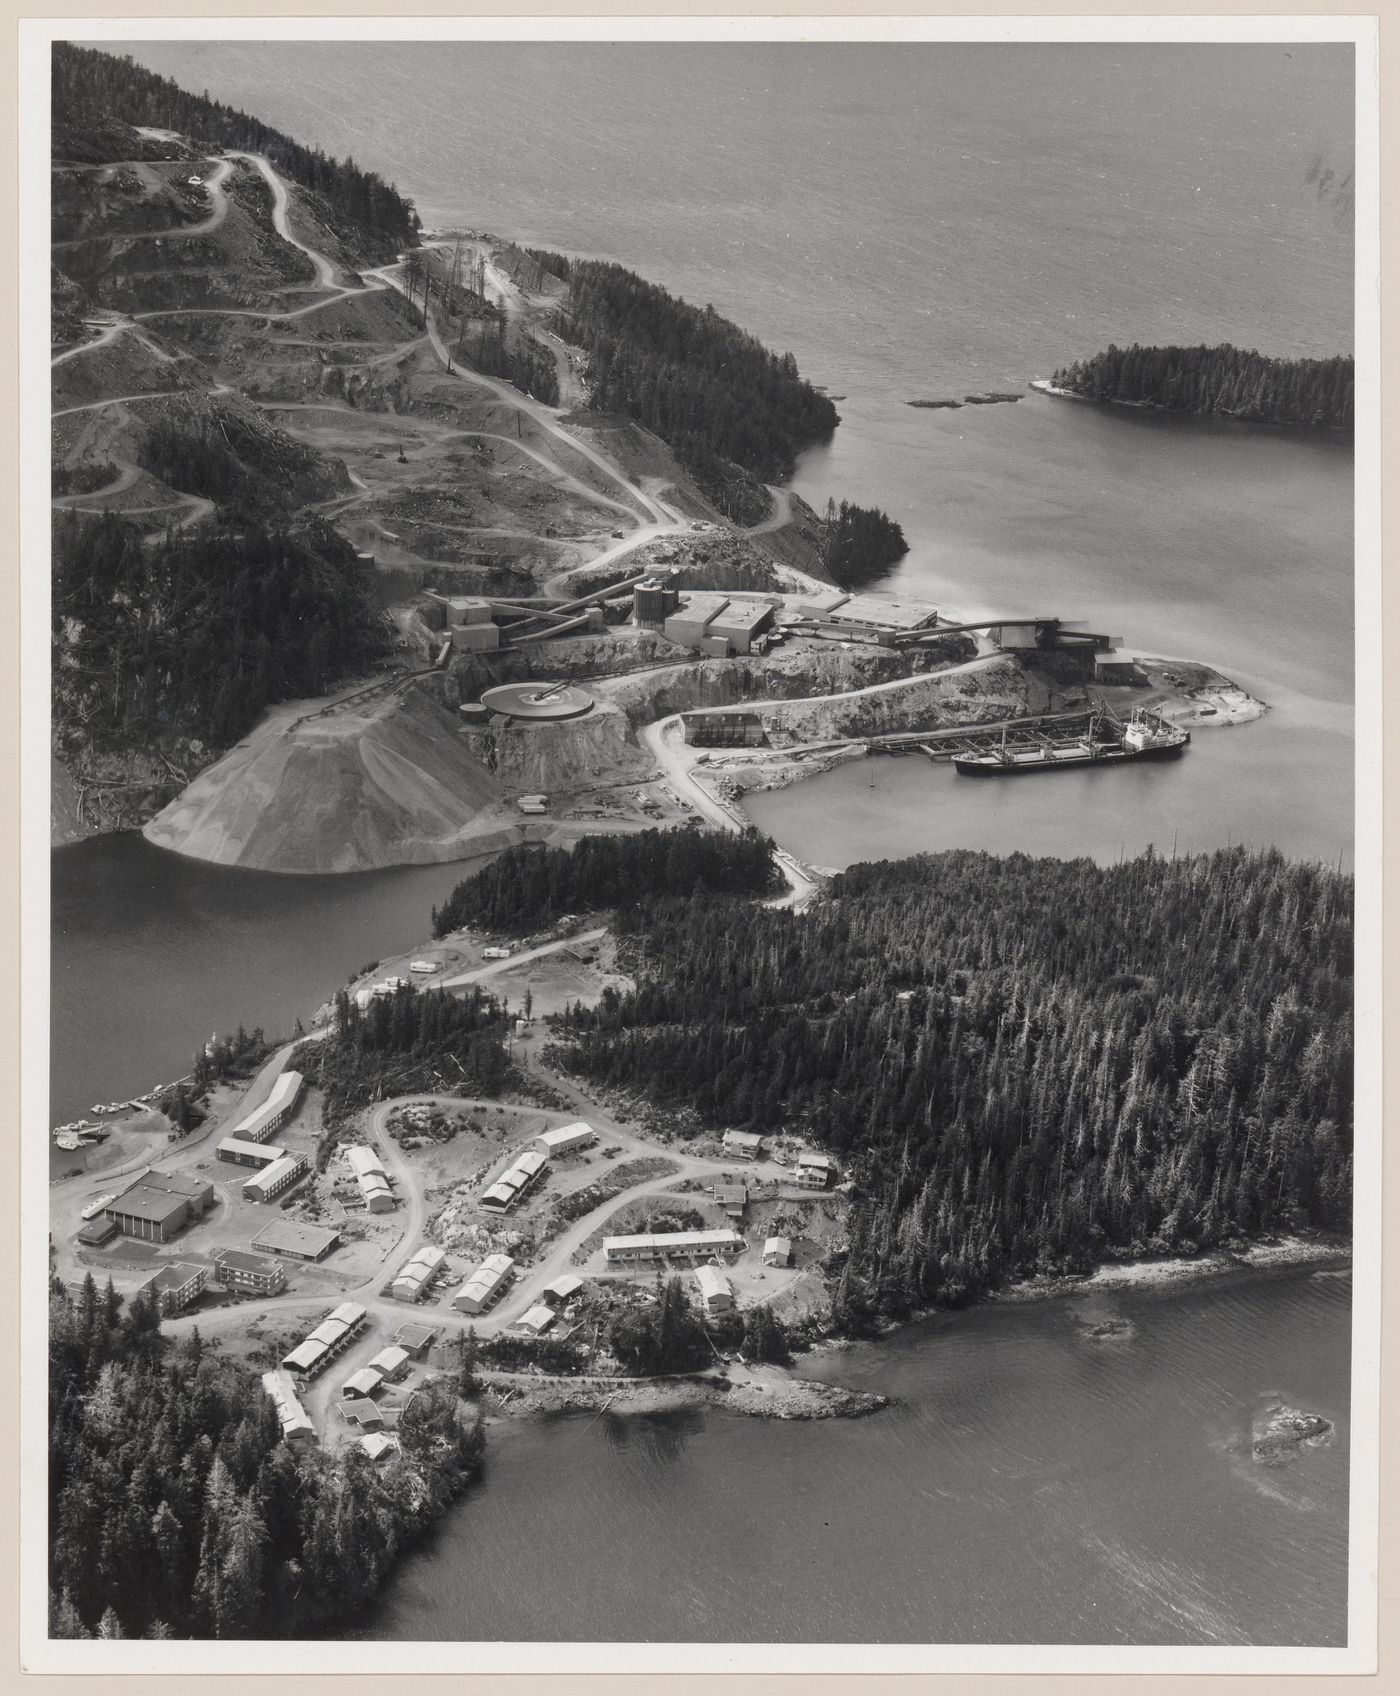 Queen Charlotte Islands, TASU on Moresby Island. TASU is community for Wesfrob Mine as seen in background, British Columbia